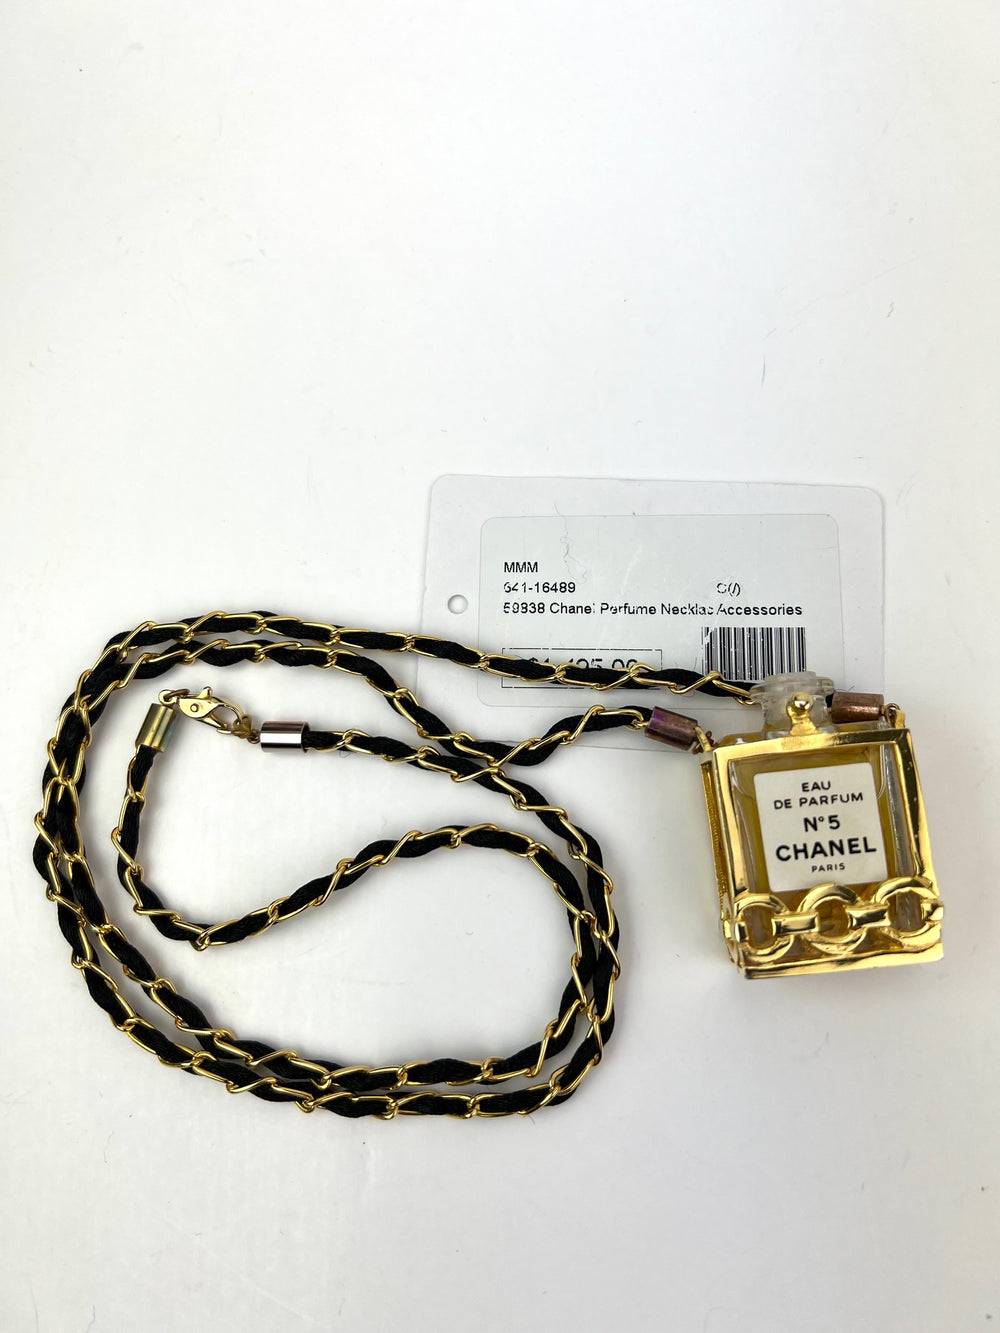 Chanel No. 5 Perfume Bottle Pendant Necklace - Gold-Tone Metal Pendant  Necklace, Necklaces - CHA170996